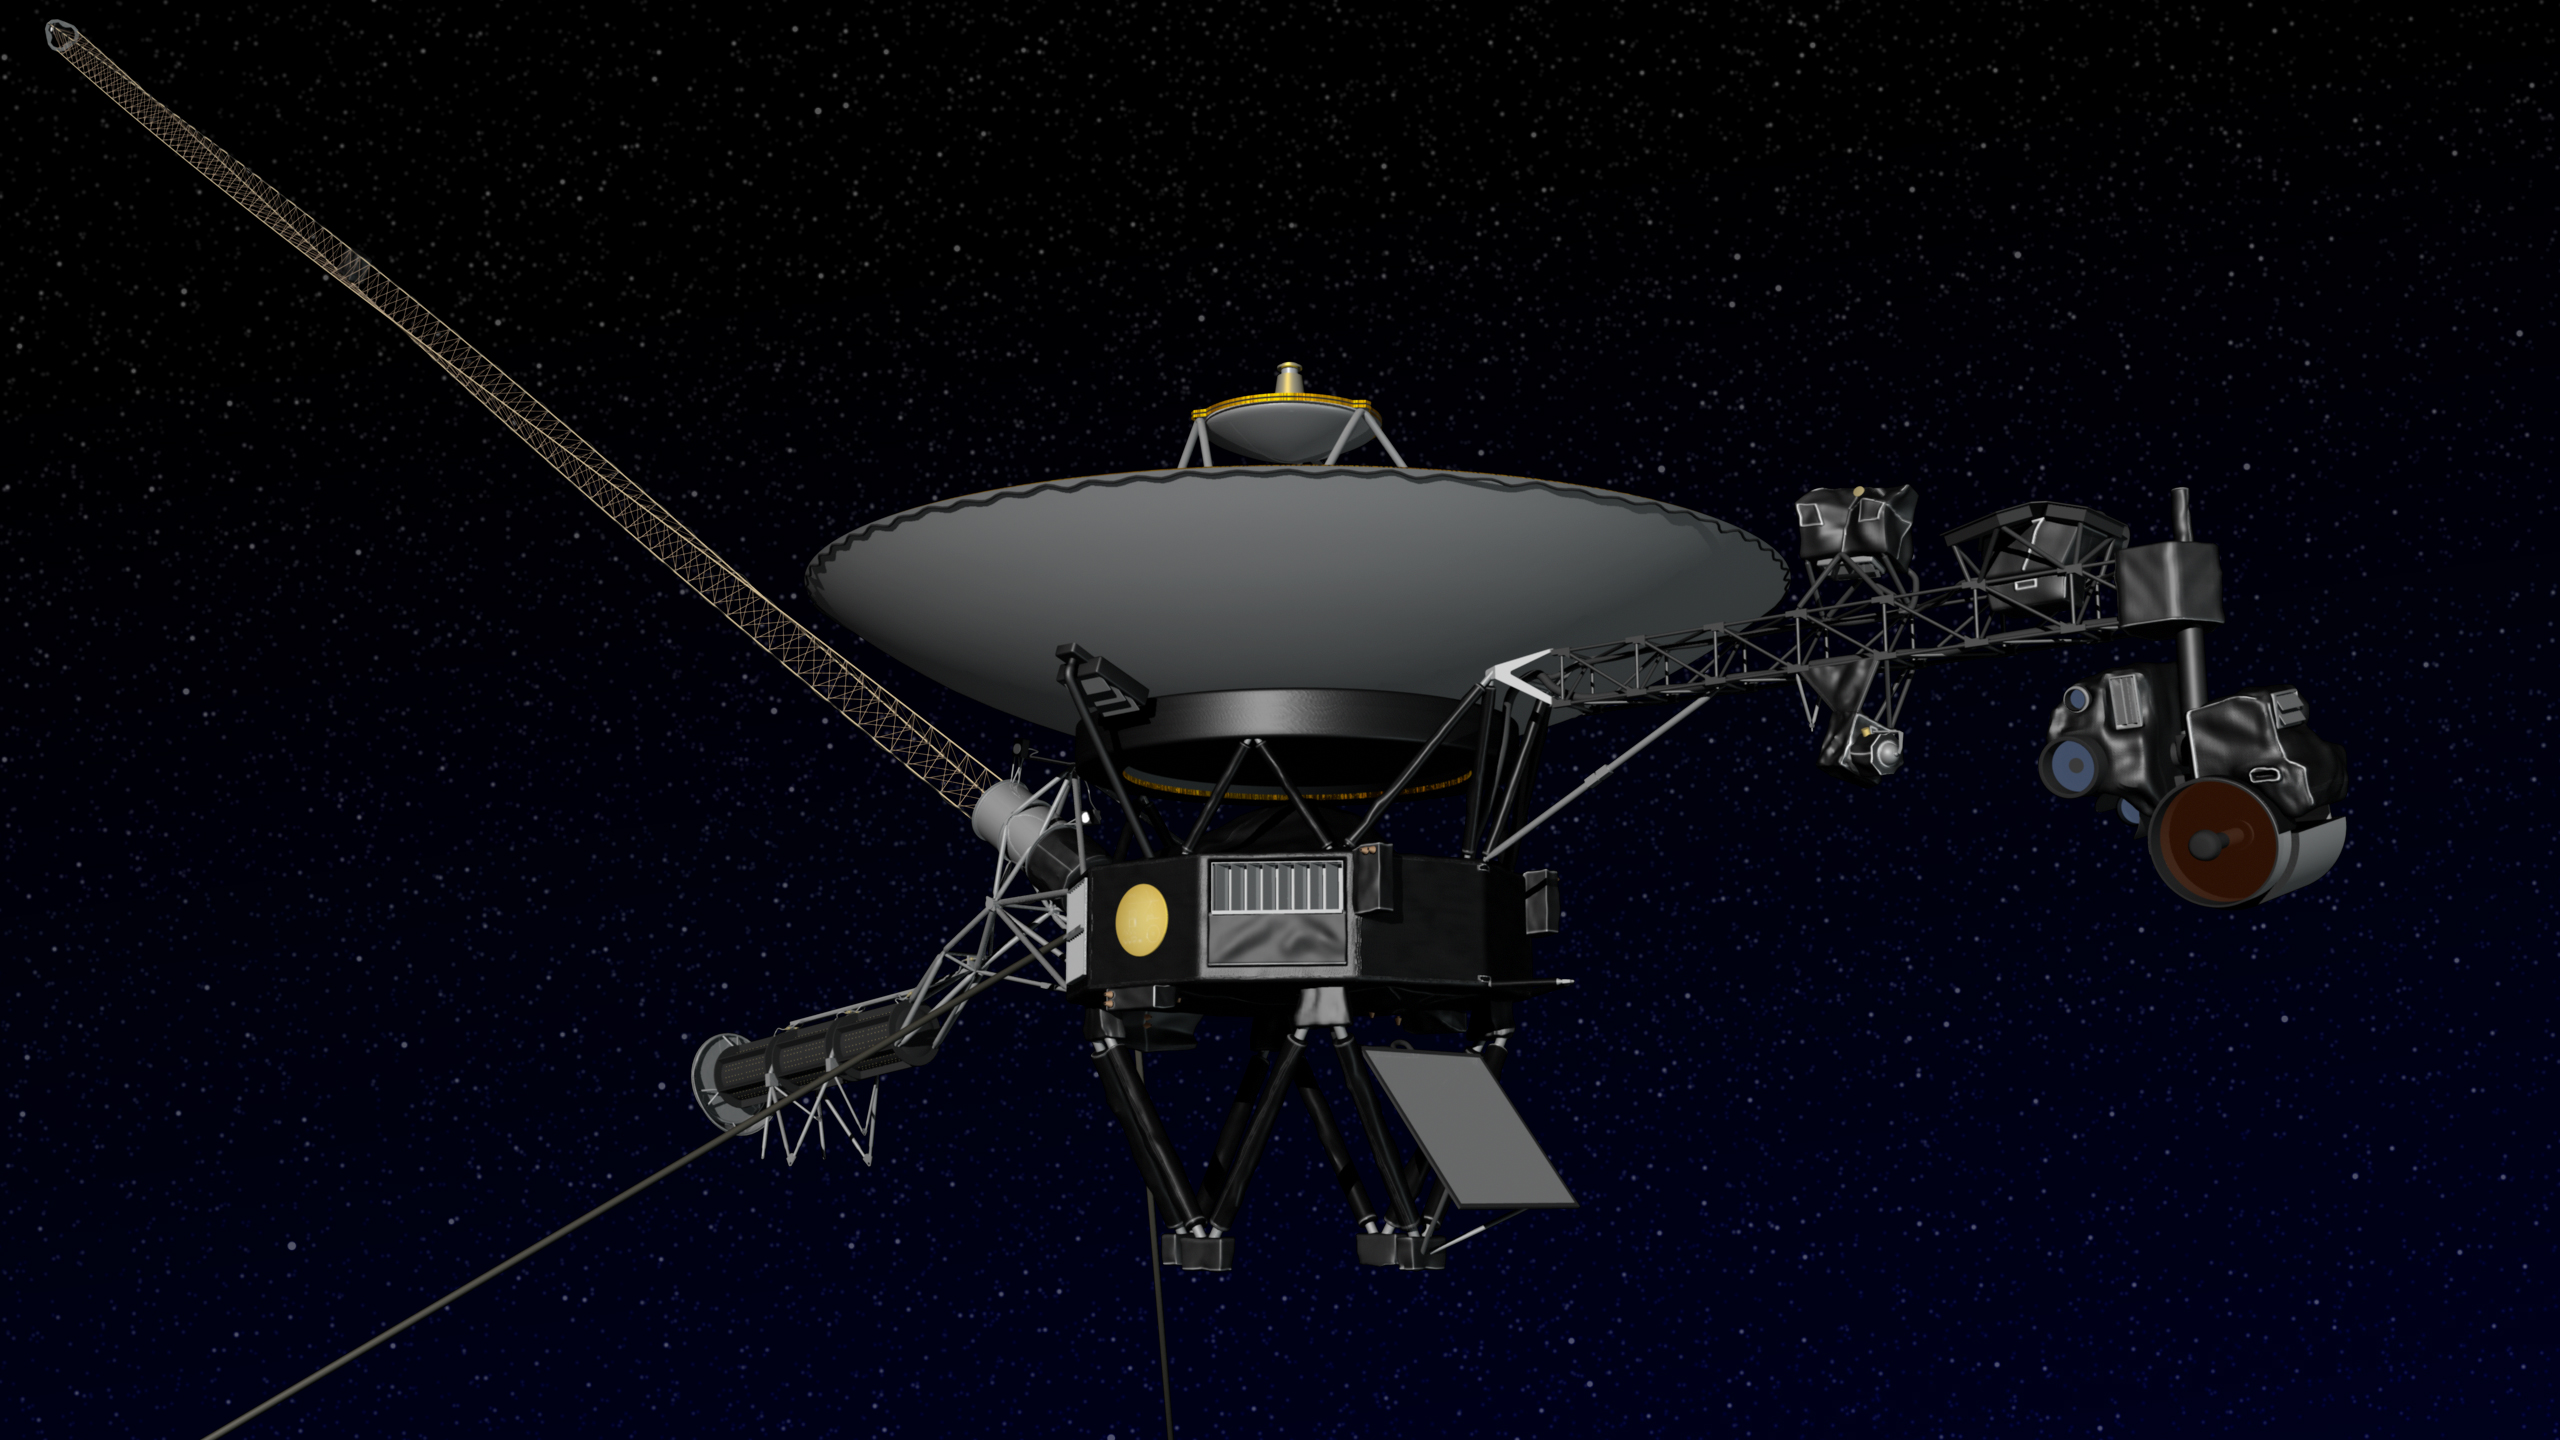 Artist's concept of NASA's Voyager spacecraft. Image credit: NASA/JPL-Caltech